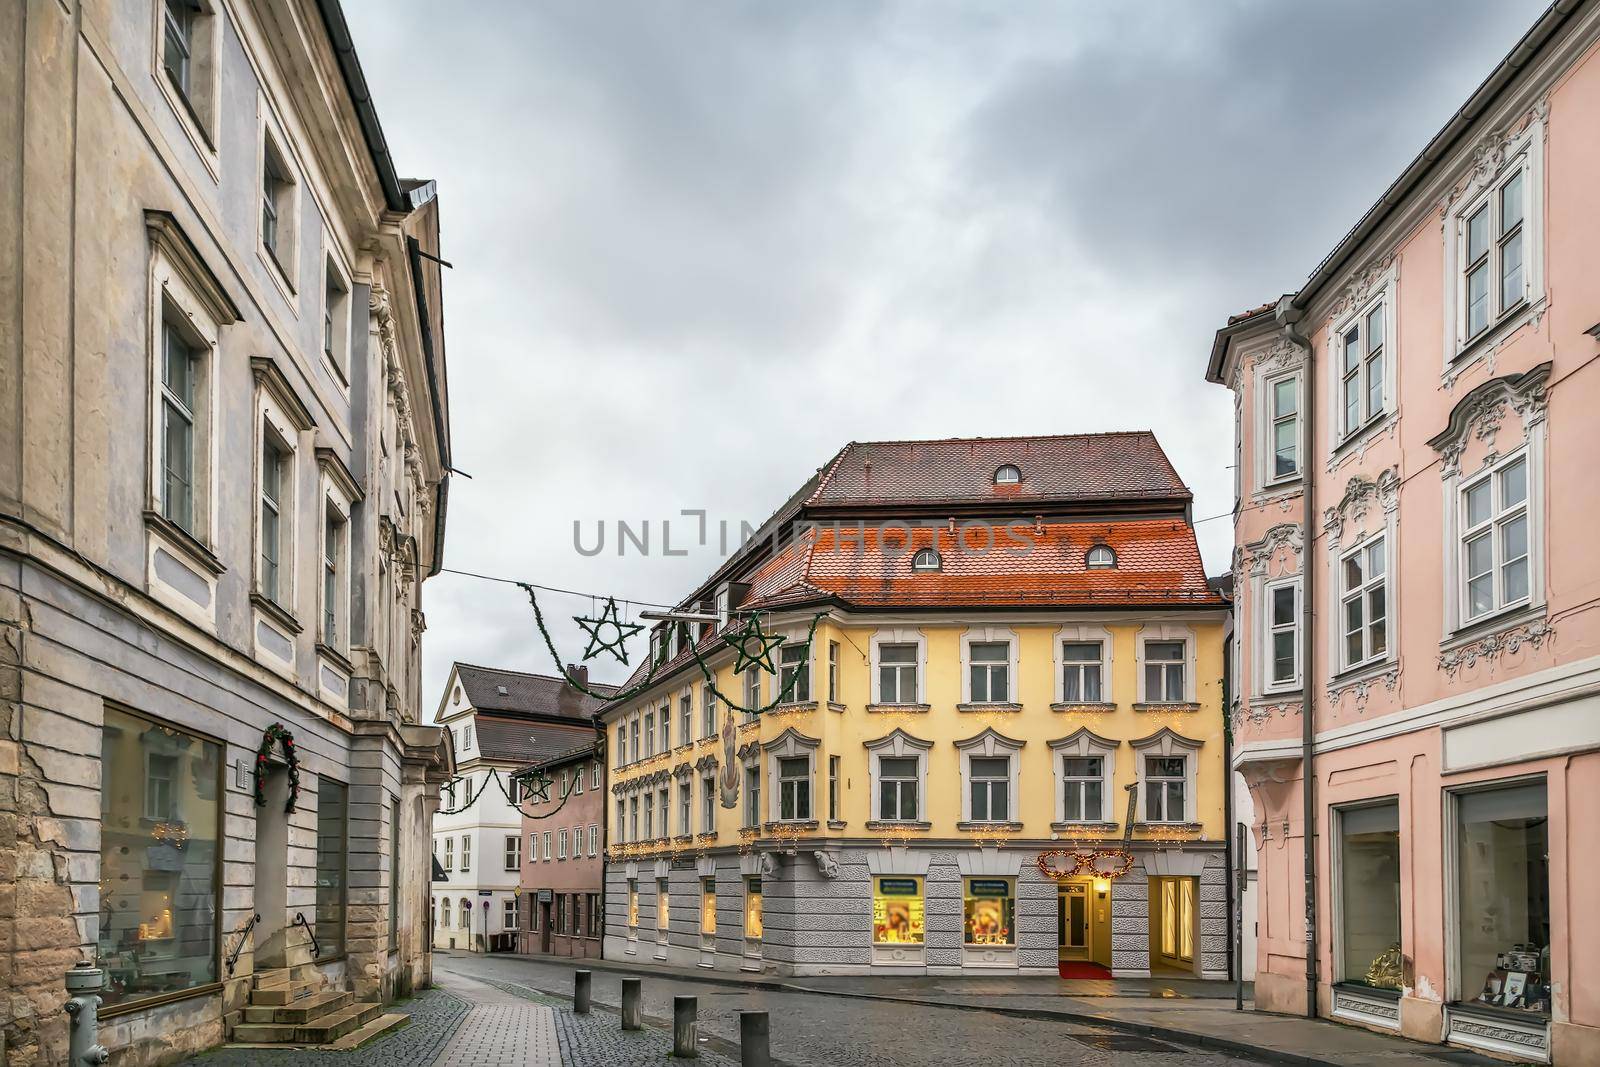 Street in Eichstatt, Germany  by borisb17